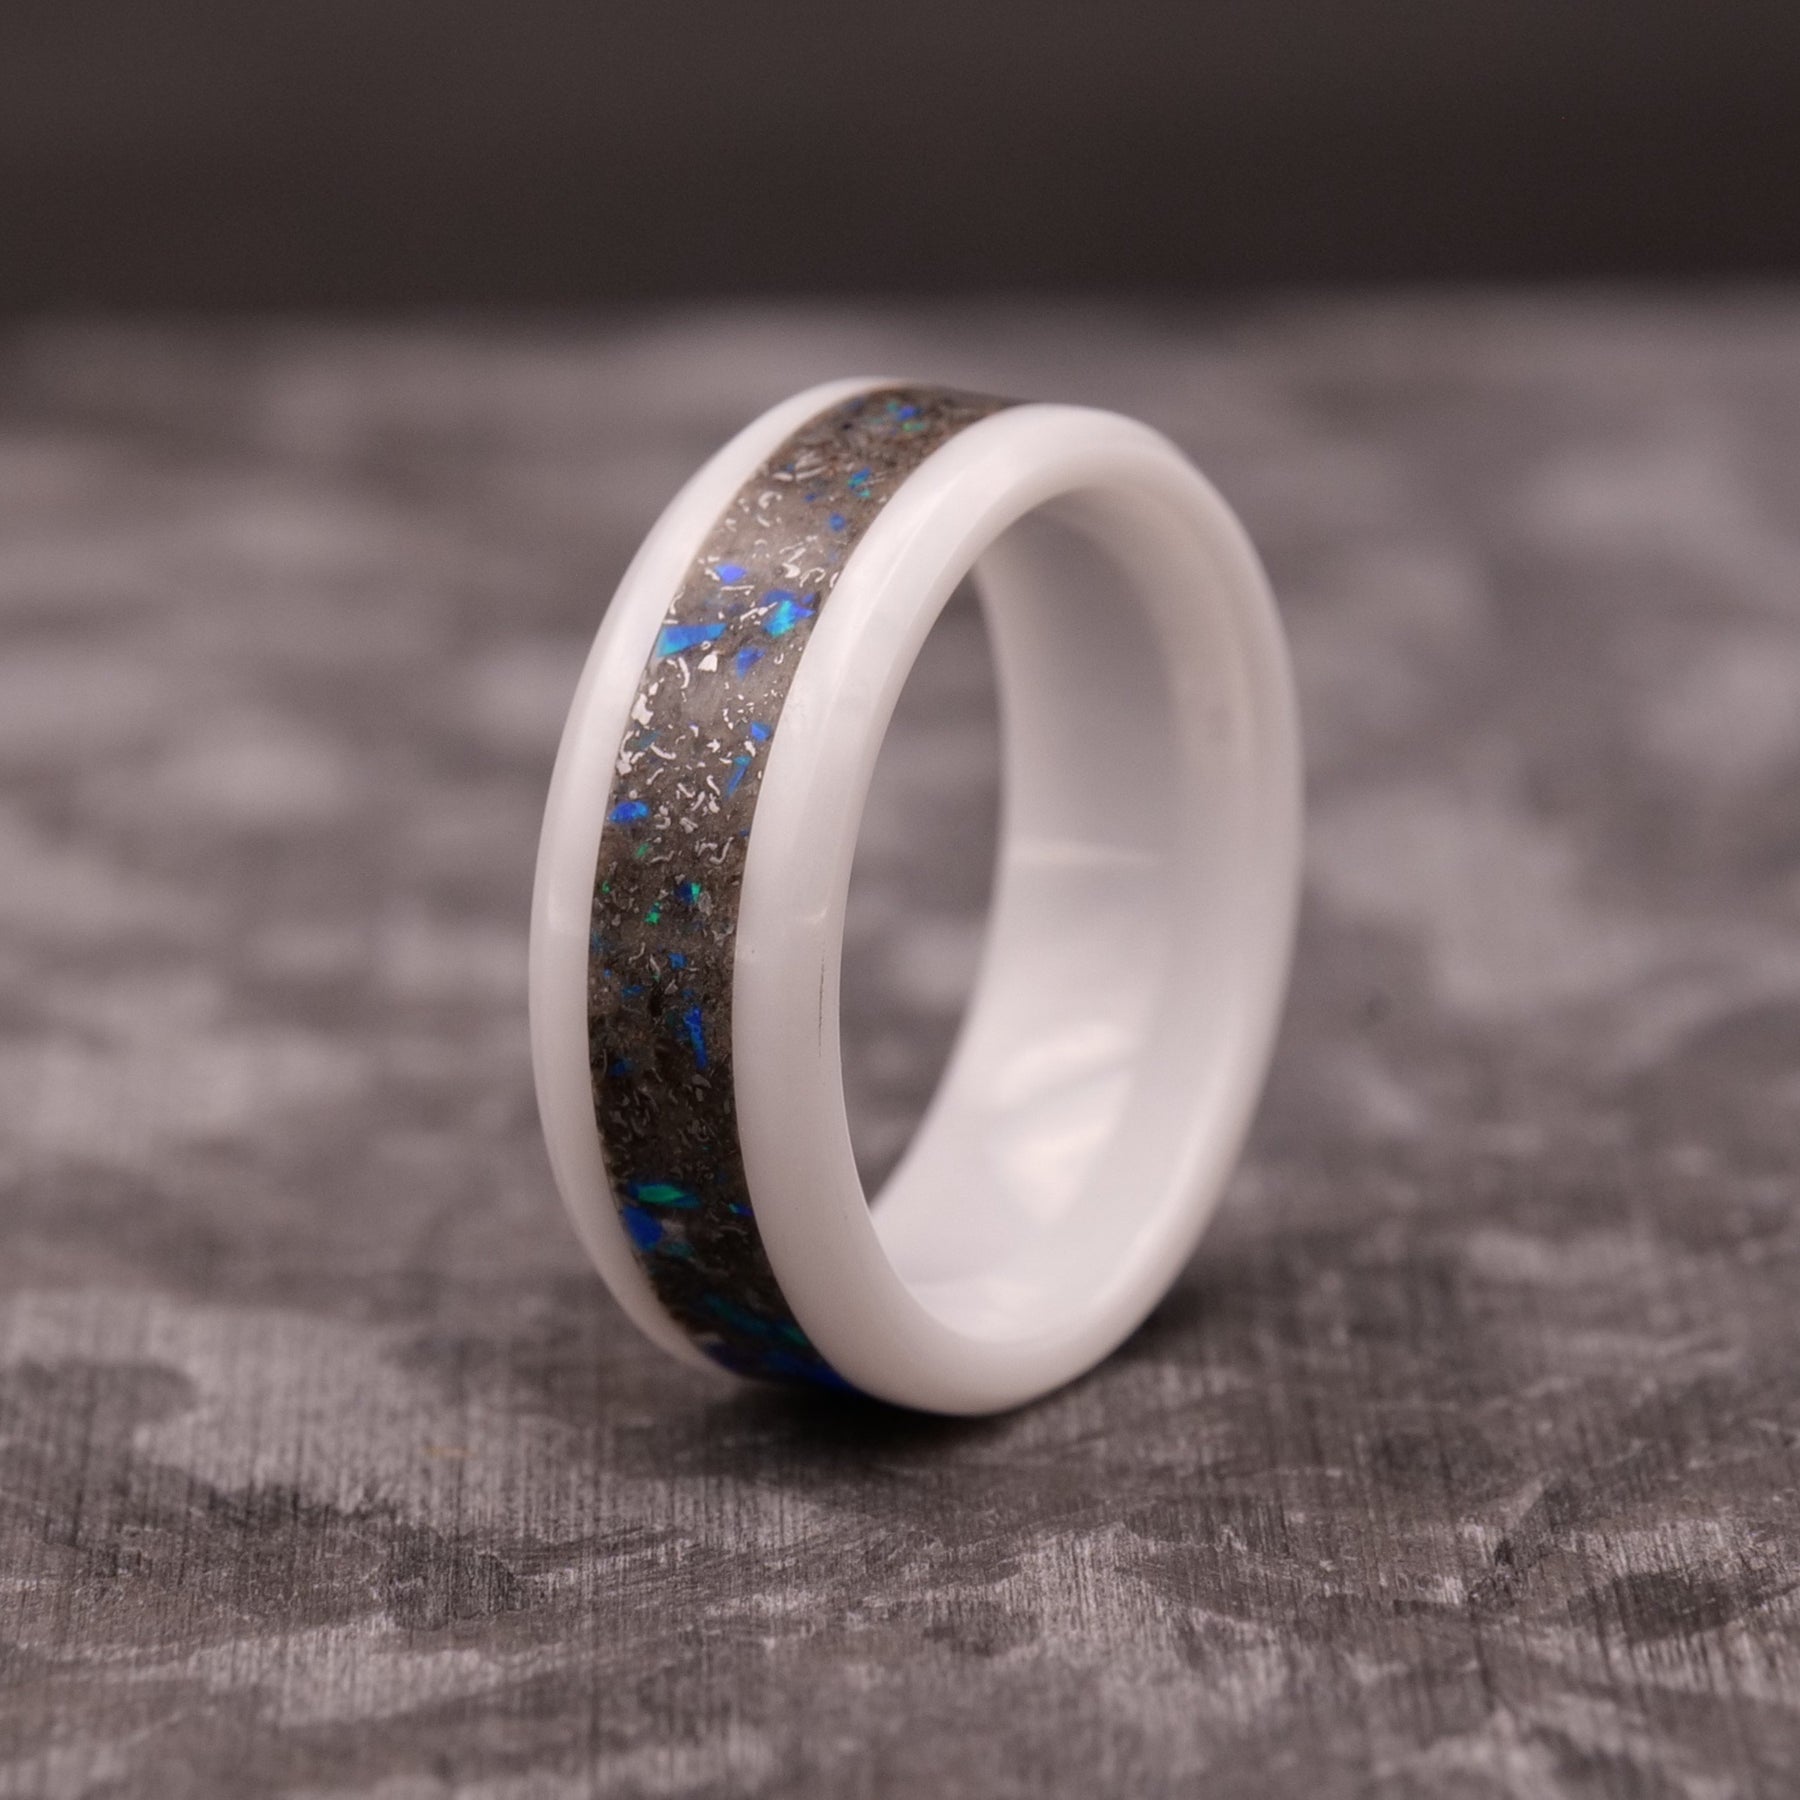 Star Designs Adair | in Patrick White Dust™ Ring Ceramic